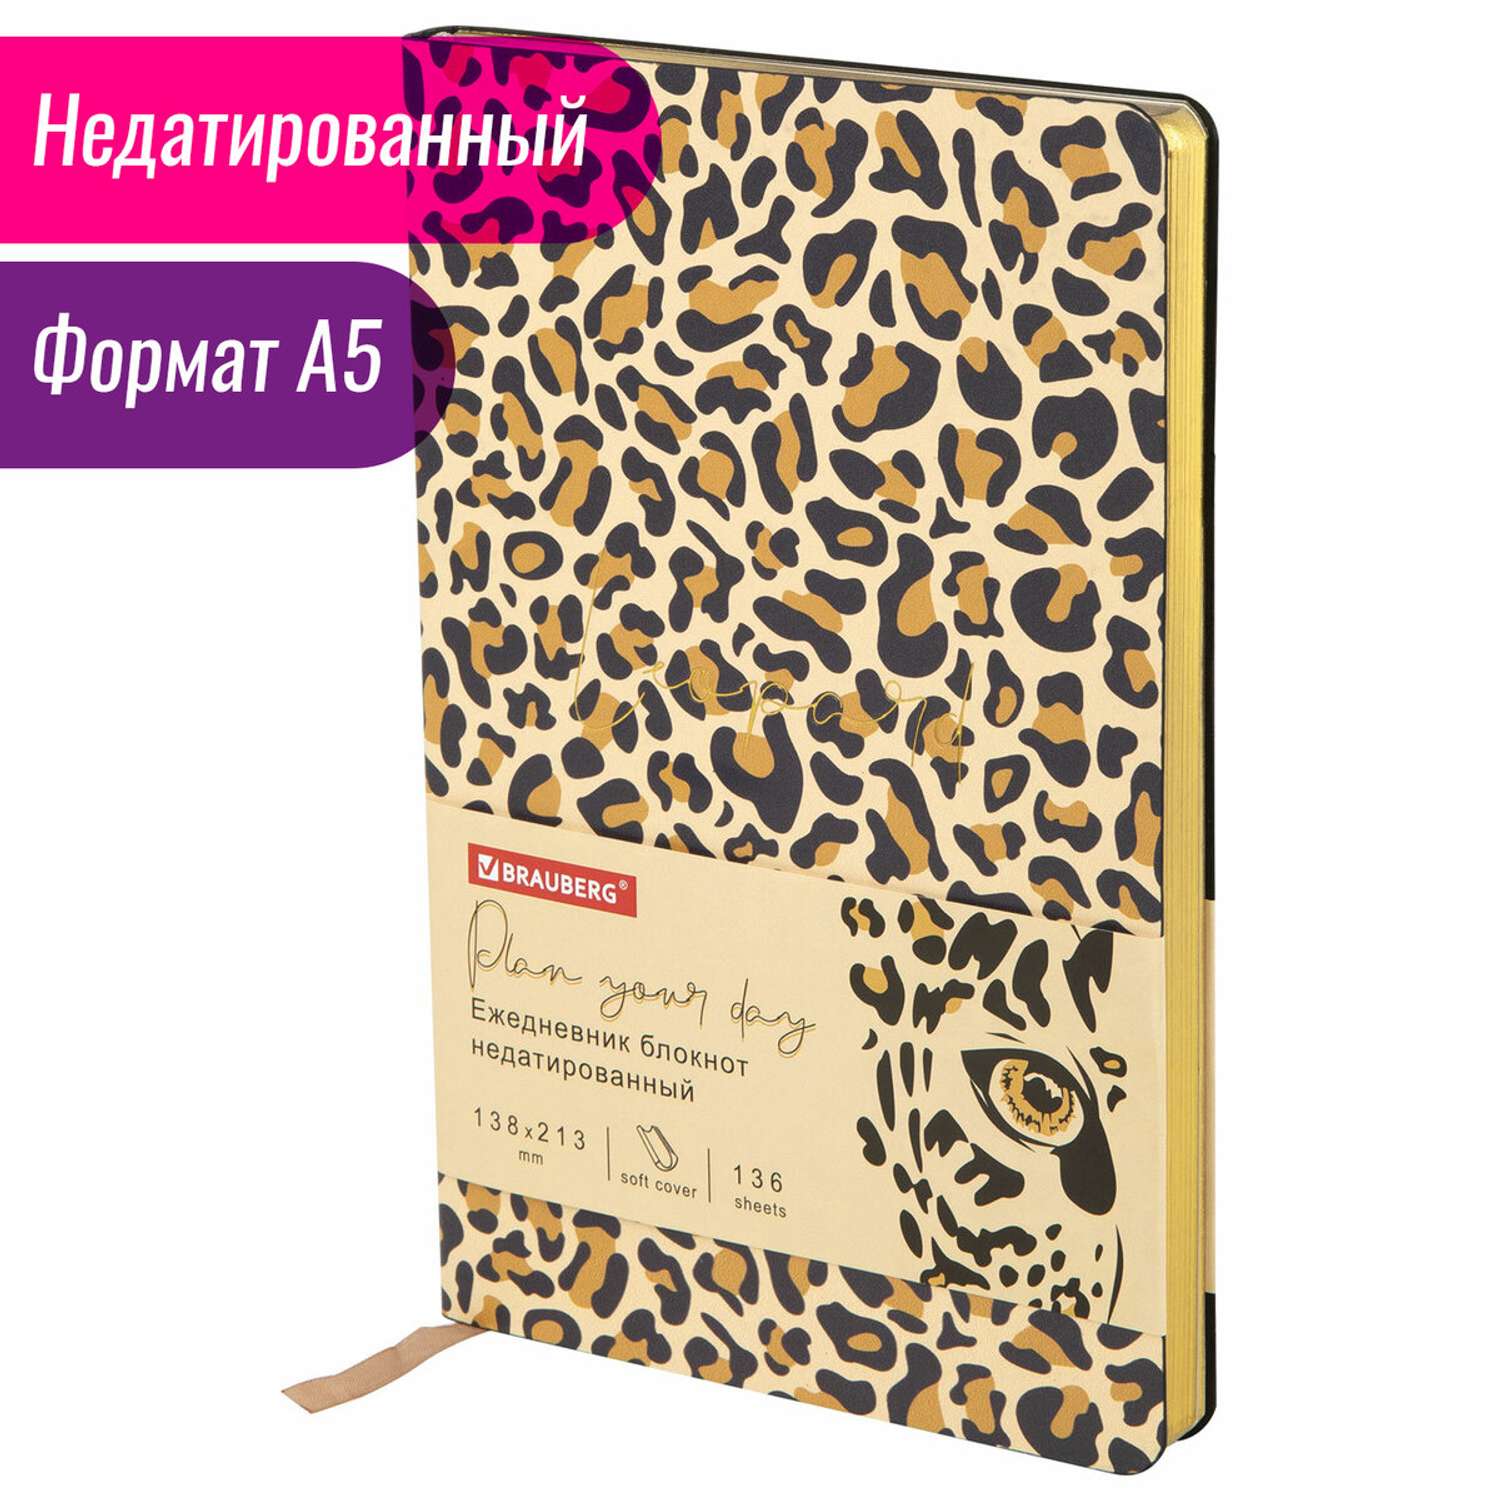 Ежедневник Brauberg недатированный А5 под кожу гибкий 136 листов Leopard - фото 2